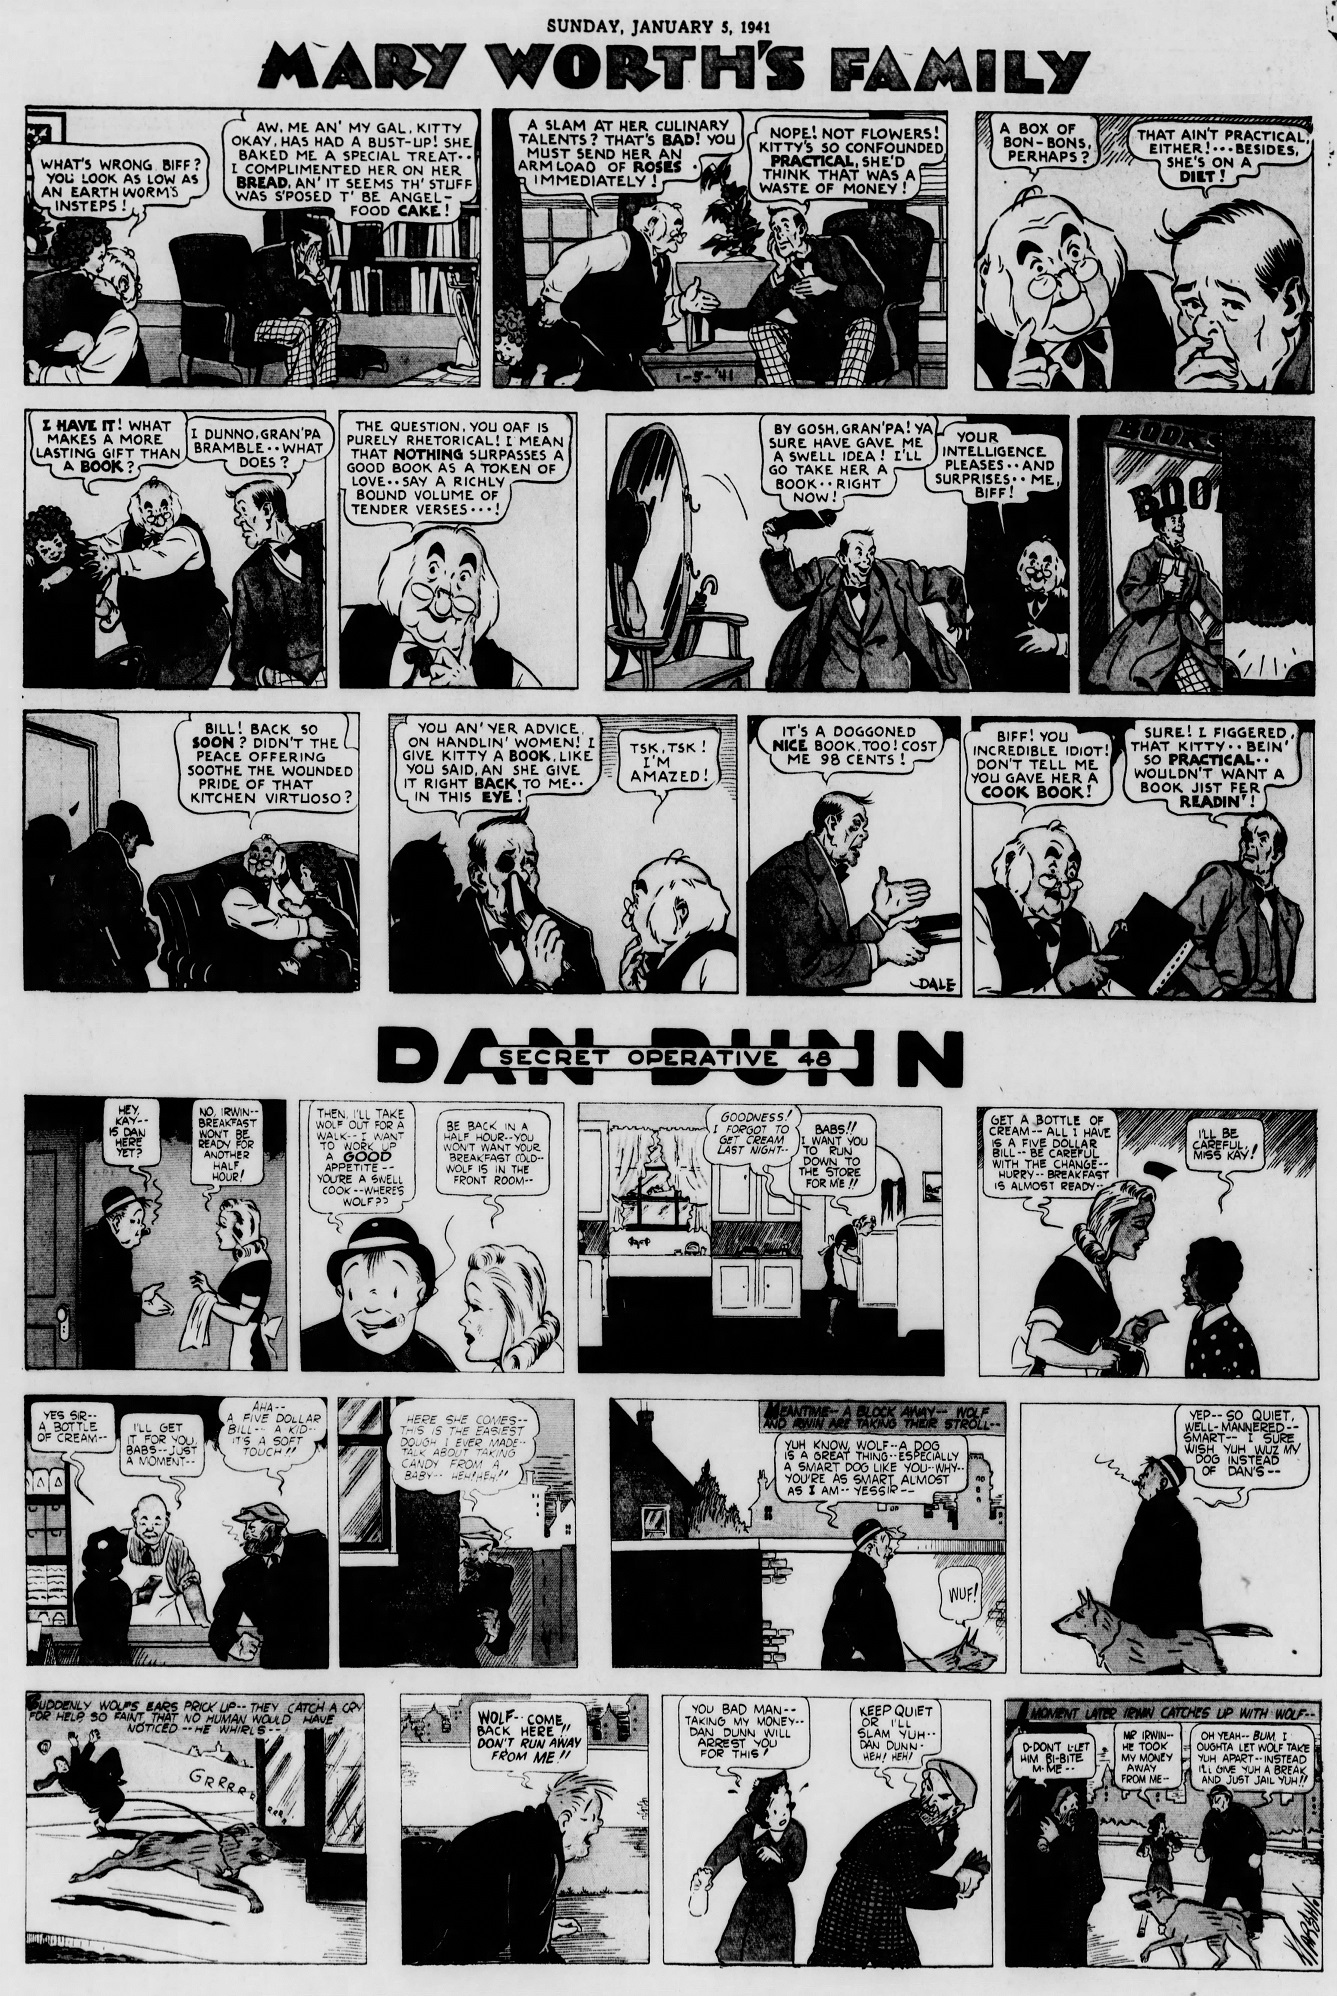 The_Brooklyn_Daily_Eagle_Sun__Jan_5__1941_(8).jpg